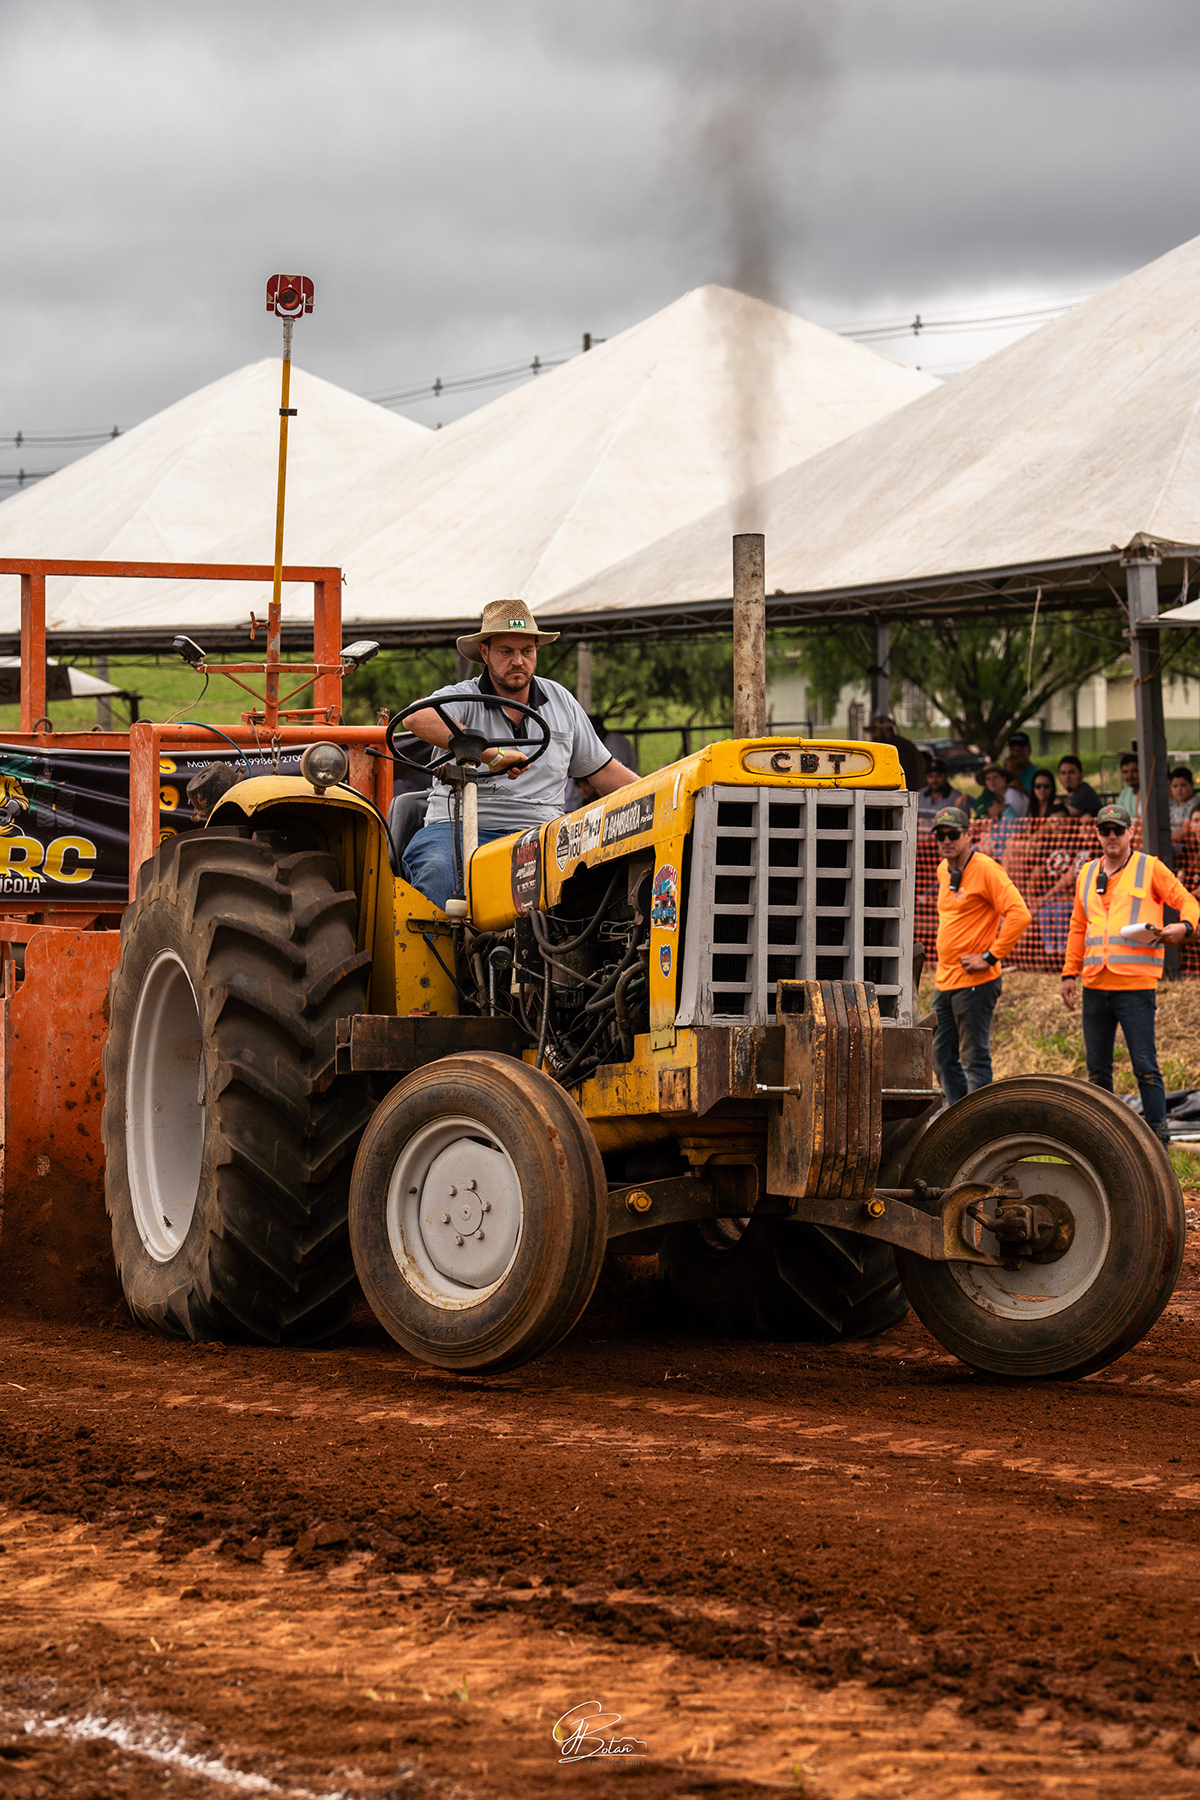 trator Tractor Agro machine arrancada race tratores máquinas pesadas maquinas agricolas agriculture